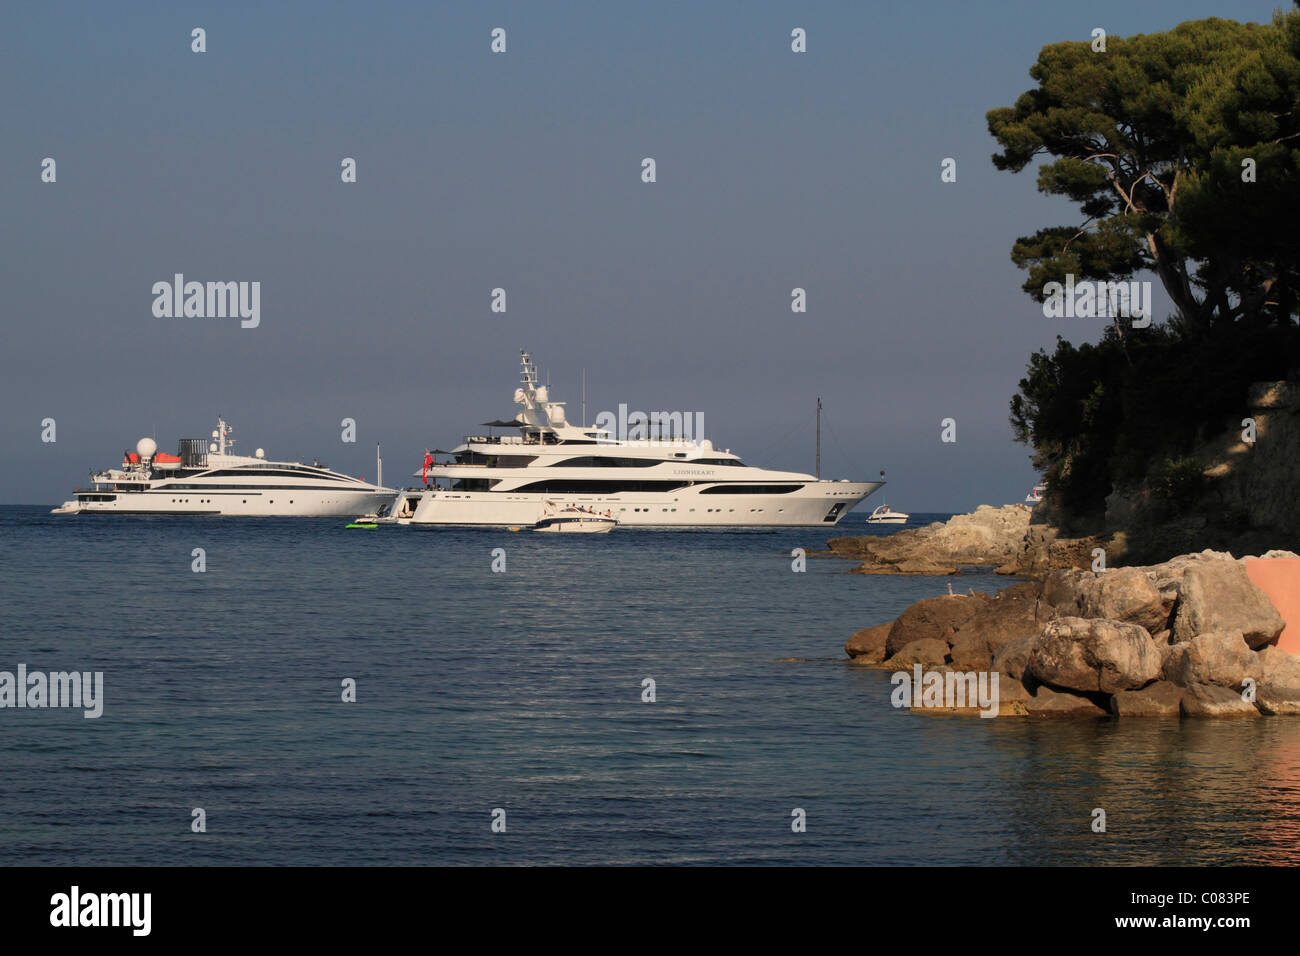 Yachts RM elegante e Cuor di Leone a Cap Ferrat, Saint Jean Cap Ferrat, Alpes Maritimes, Région Provence Alpes Côte d'Azur, in Francia Foto Stock